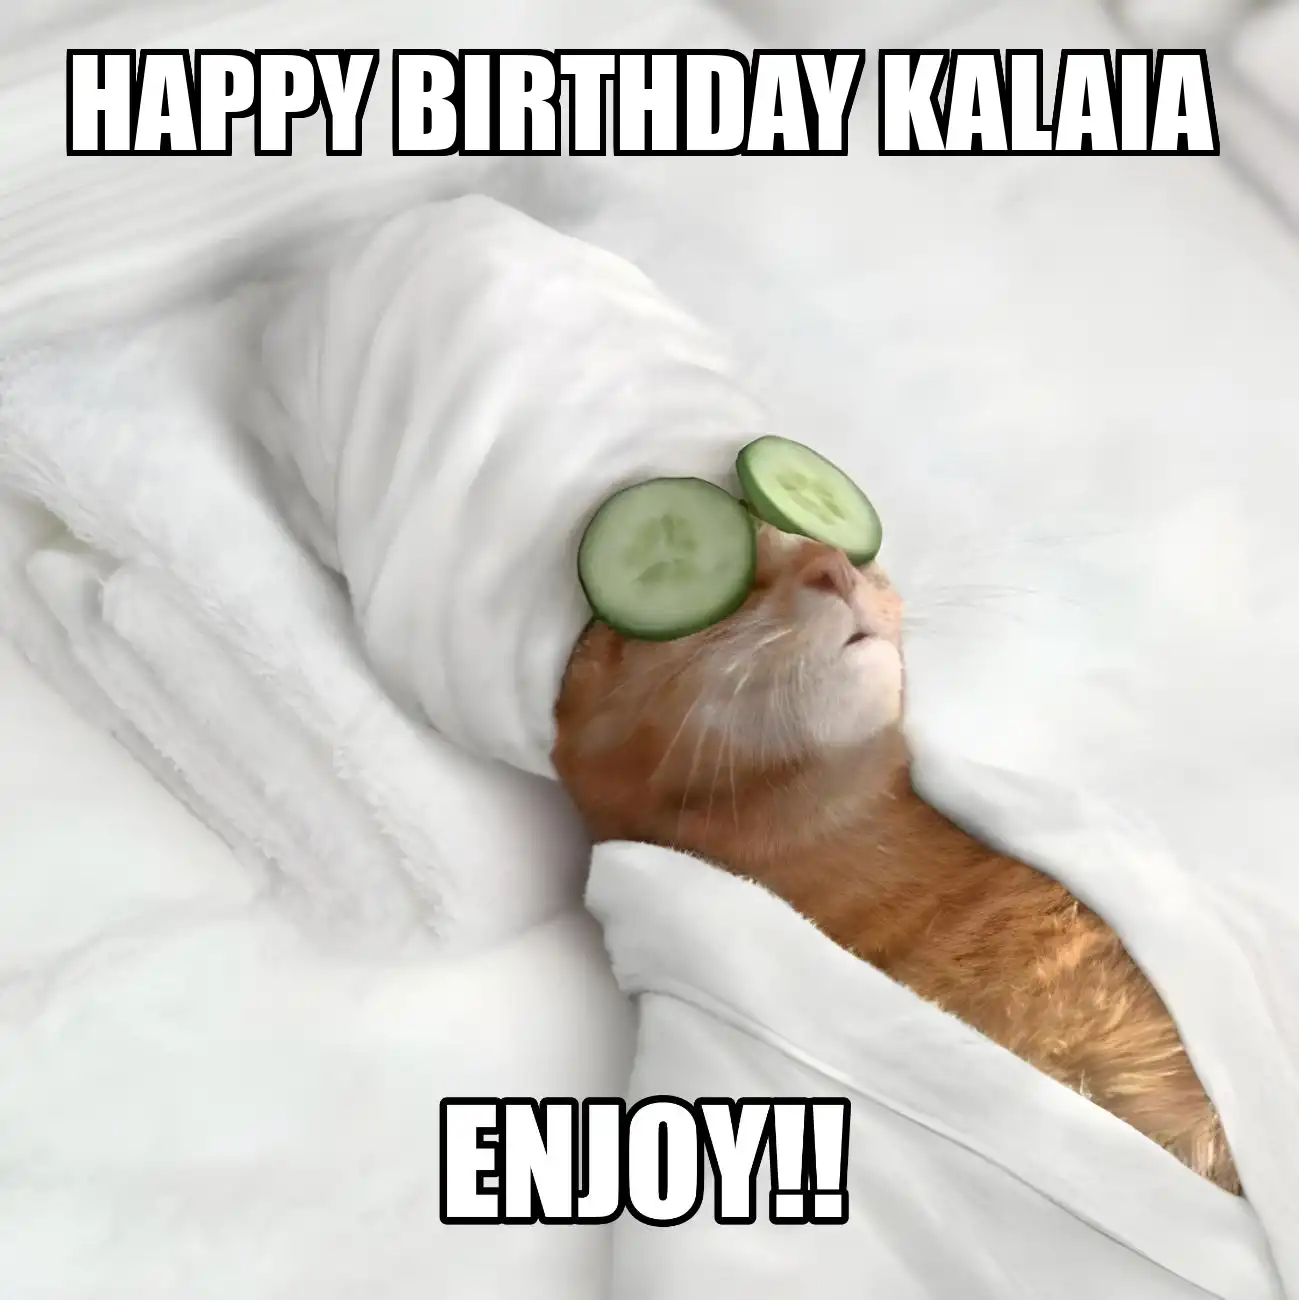 Happy Birthday Kalaia Enjoy Cat Meme